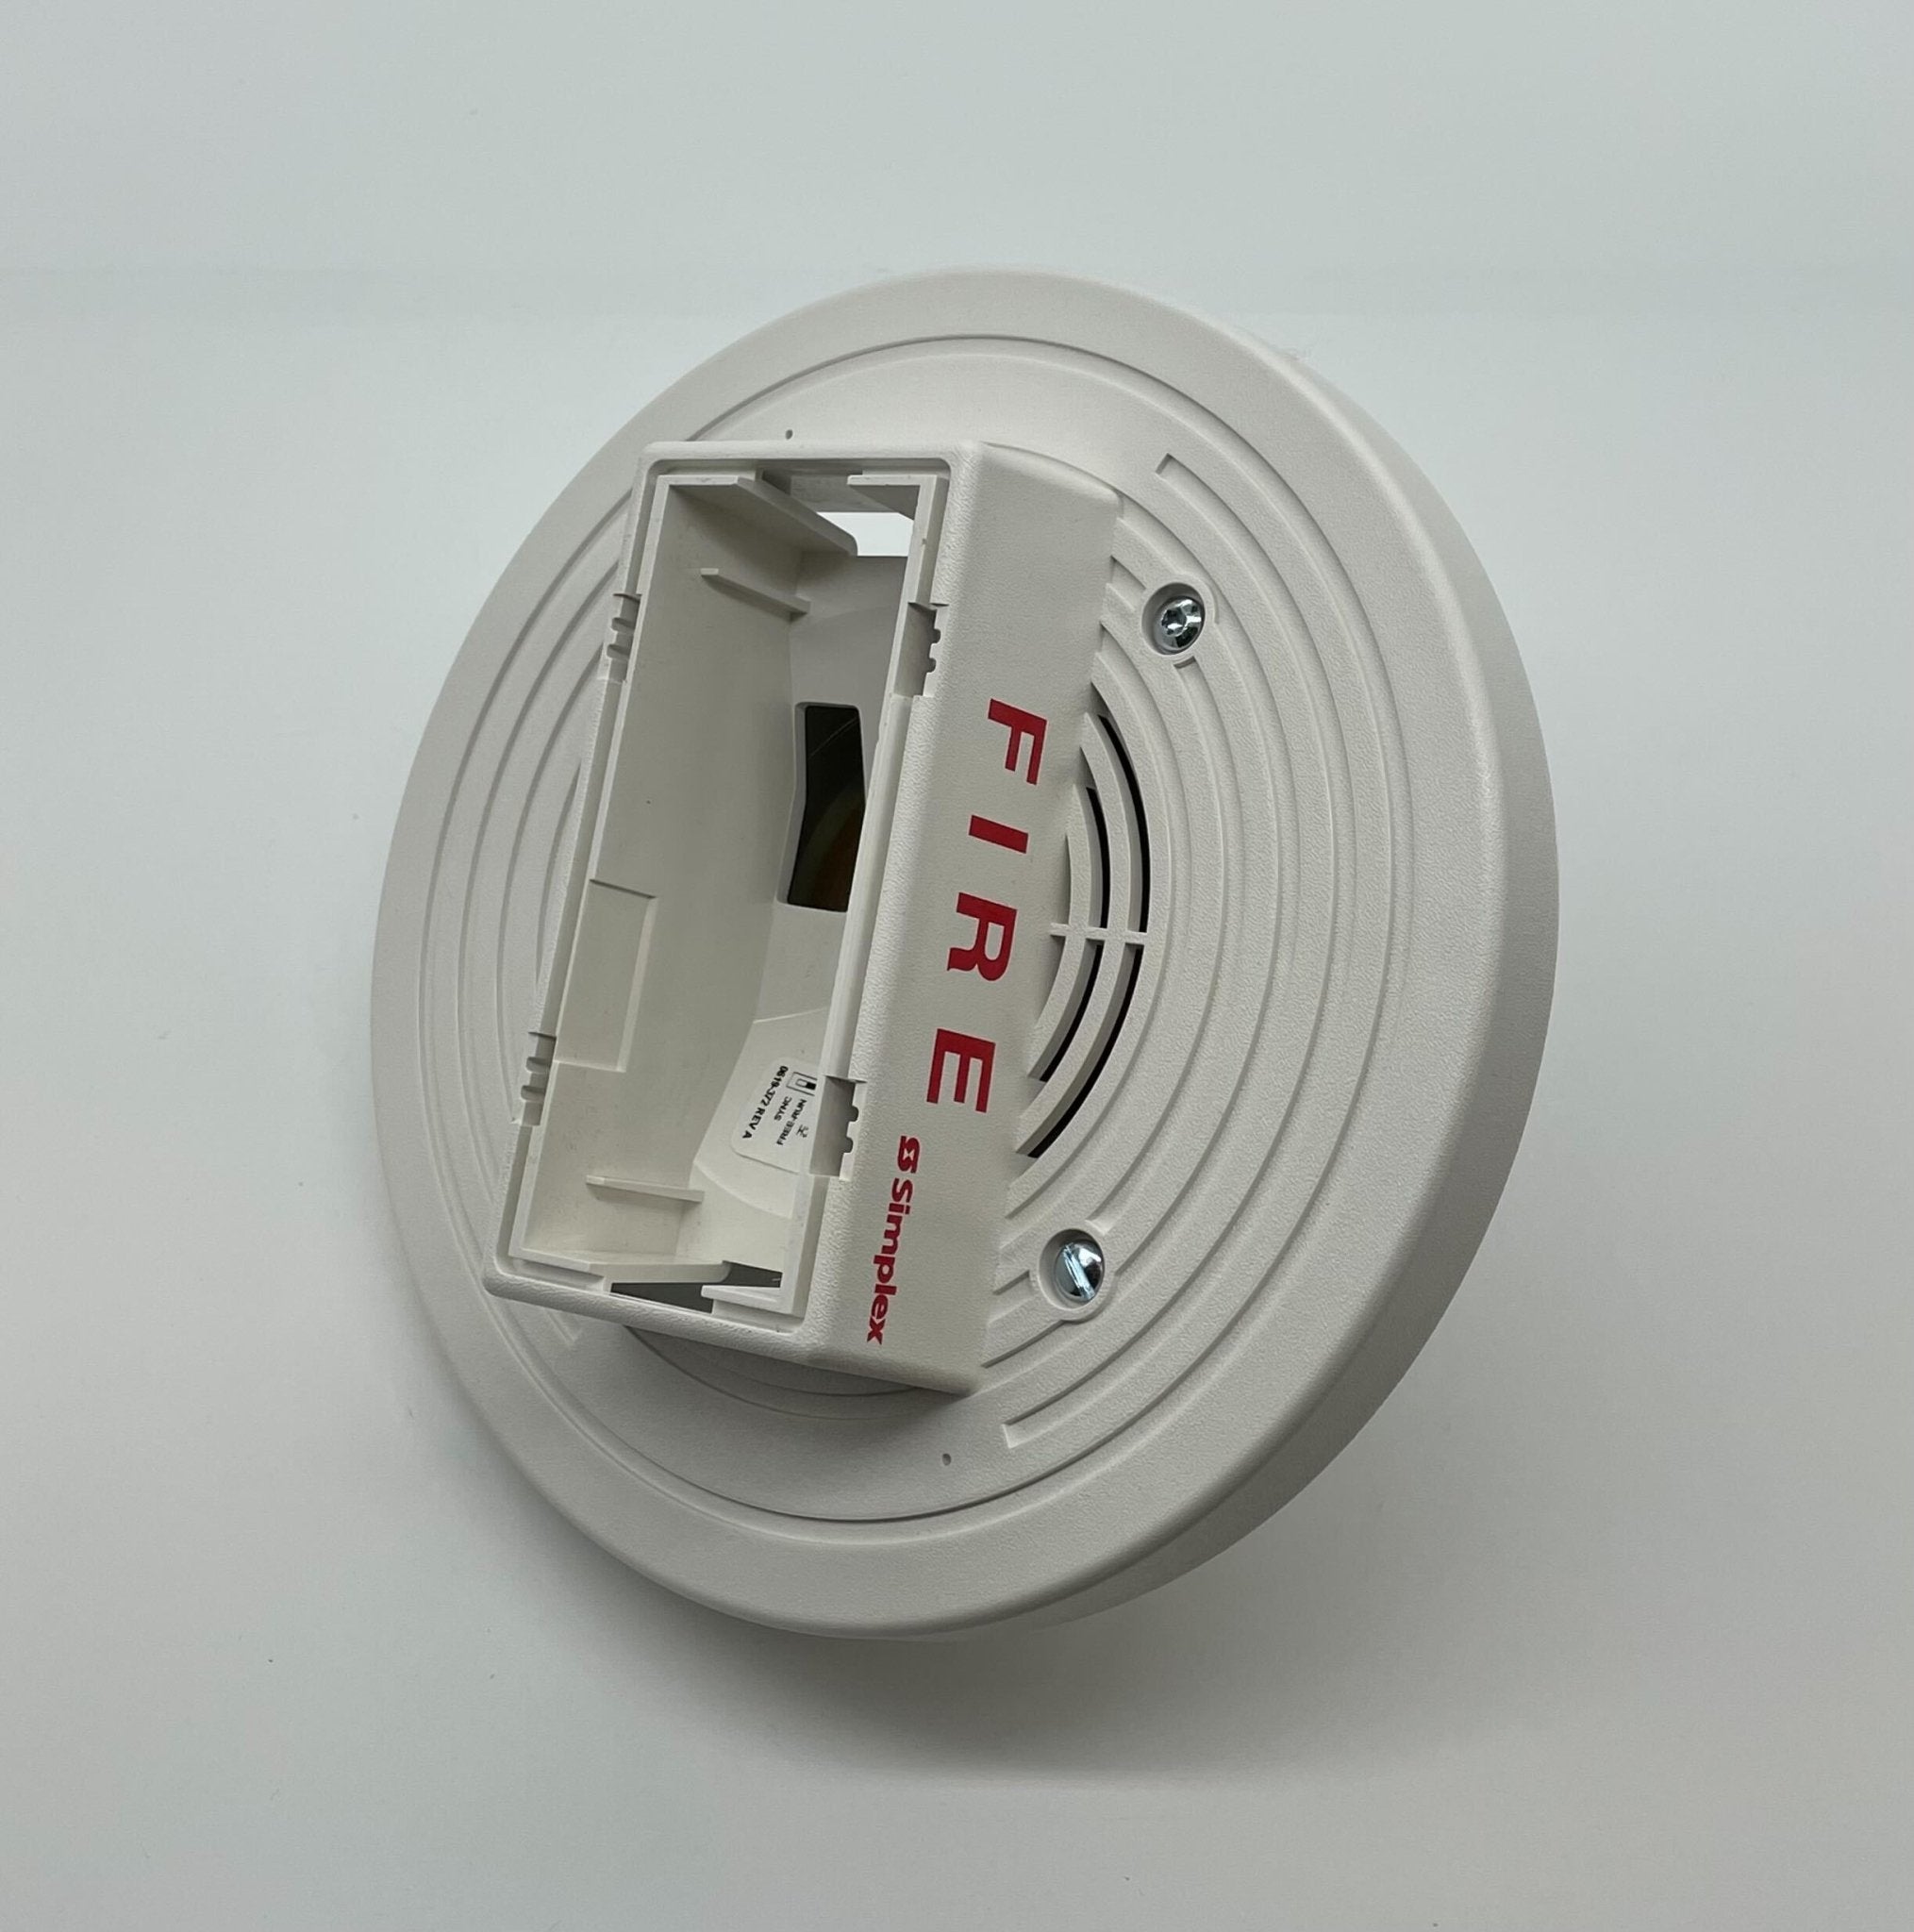 Simplex 4903-9198 Non-Addressable Round Strobe - The Fire Alarm Supplier